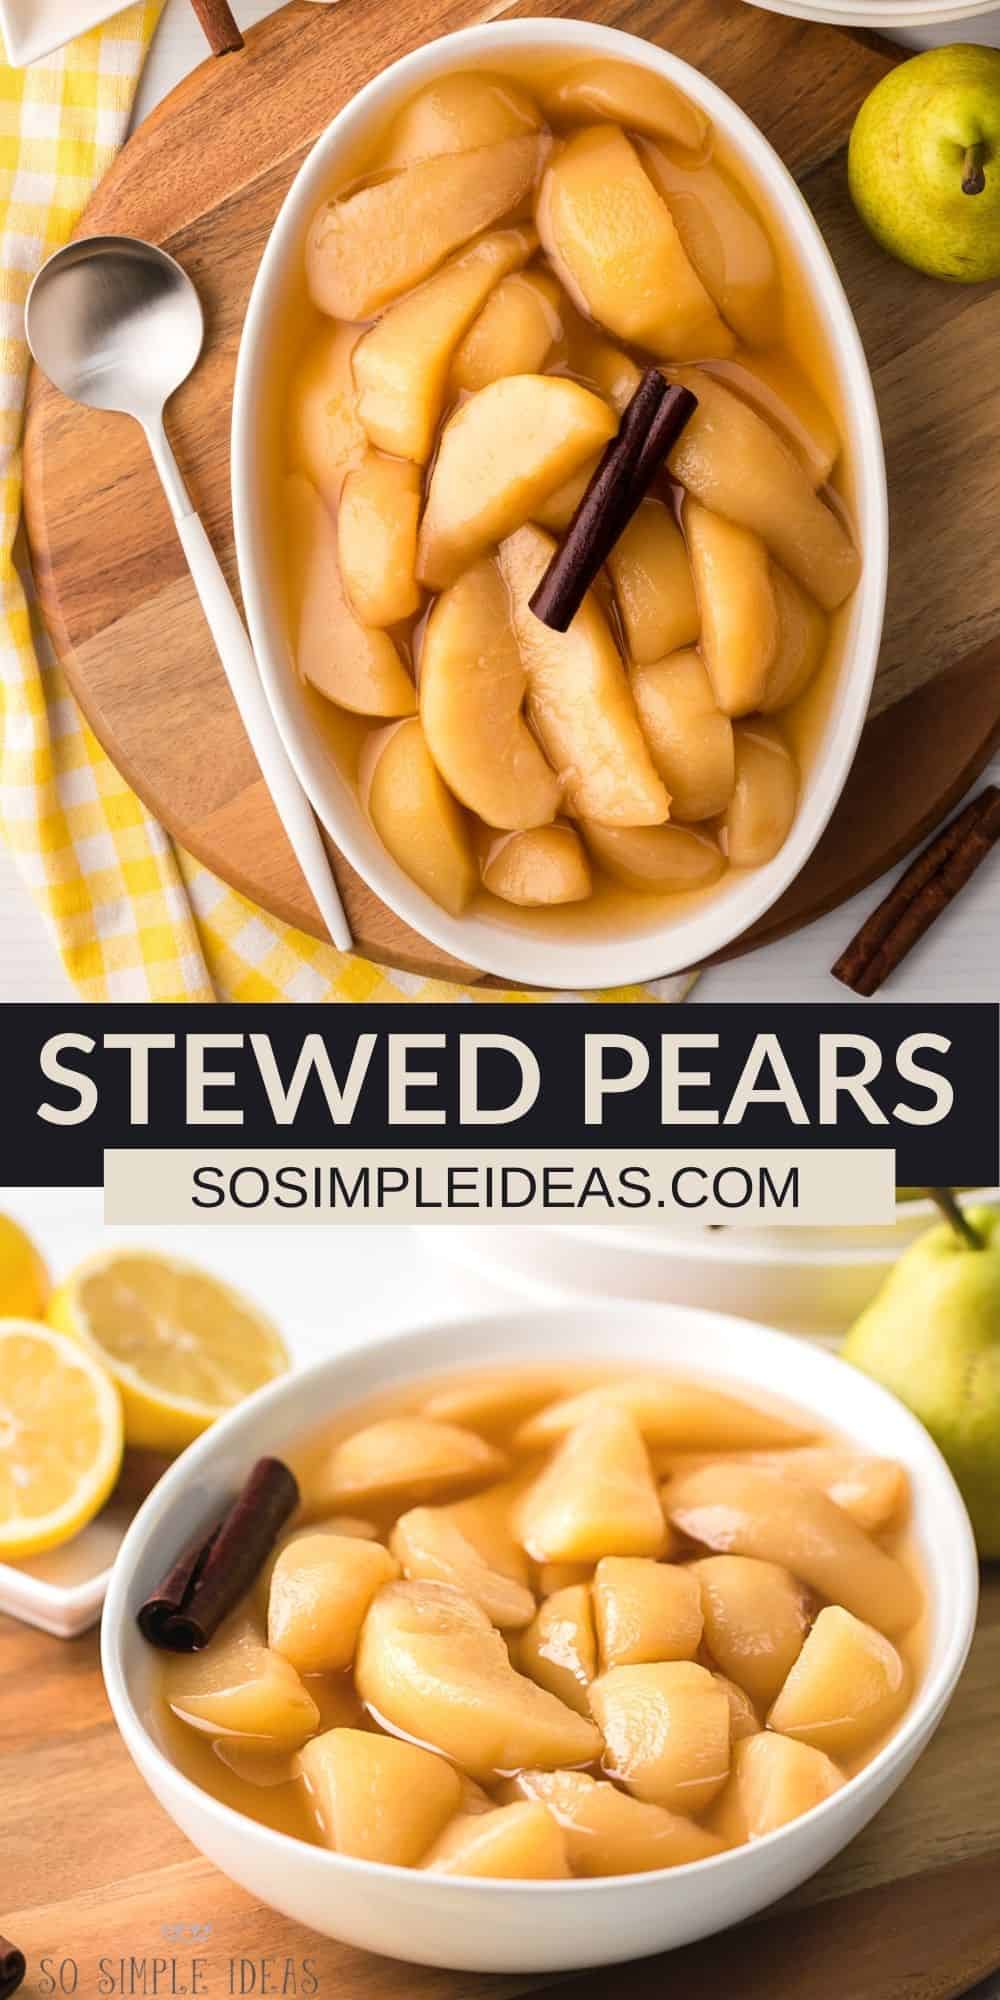 stewed pears pinterest image.